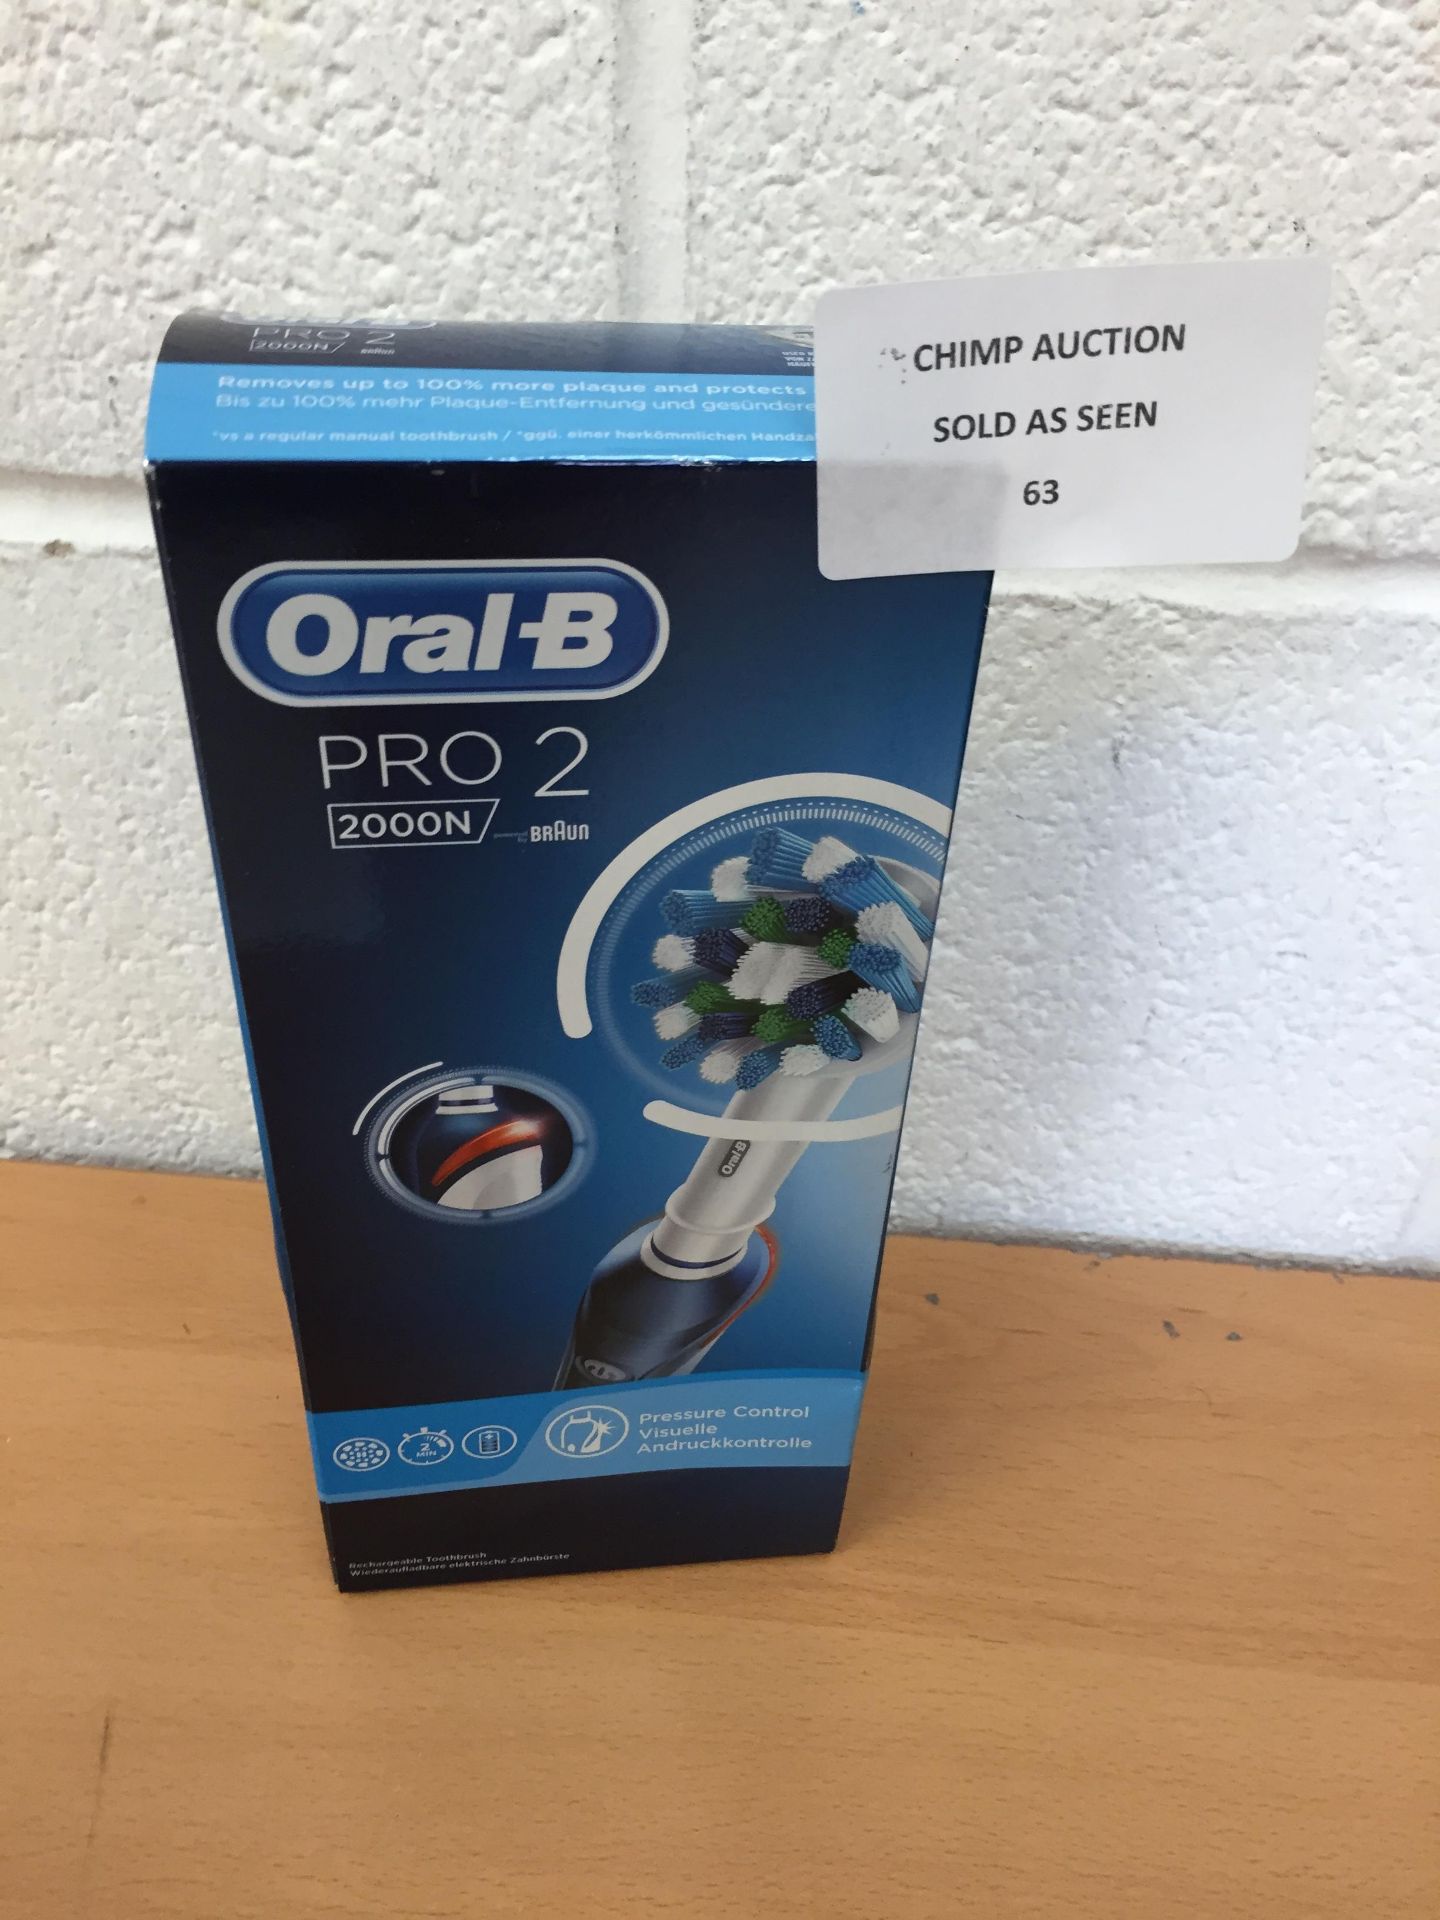 Oral-B Pro 2 electric toothbrush